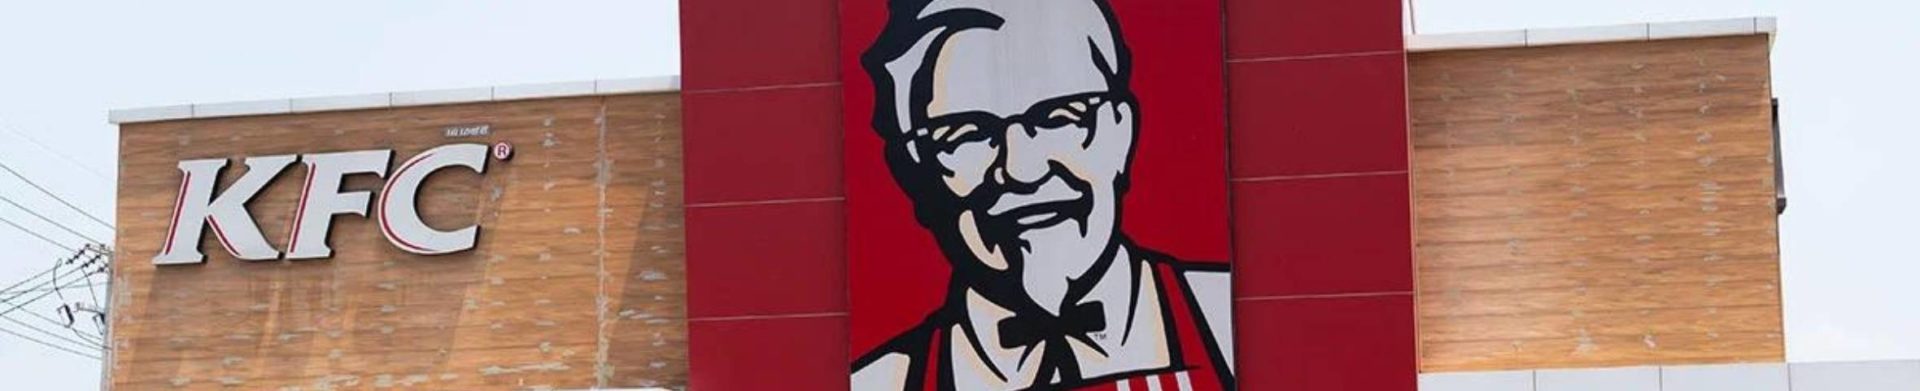 a KFC restaurant front